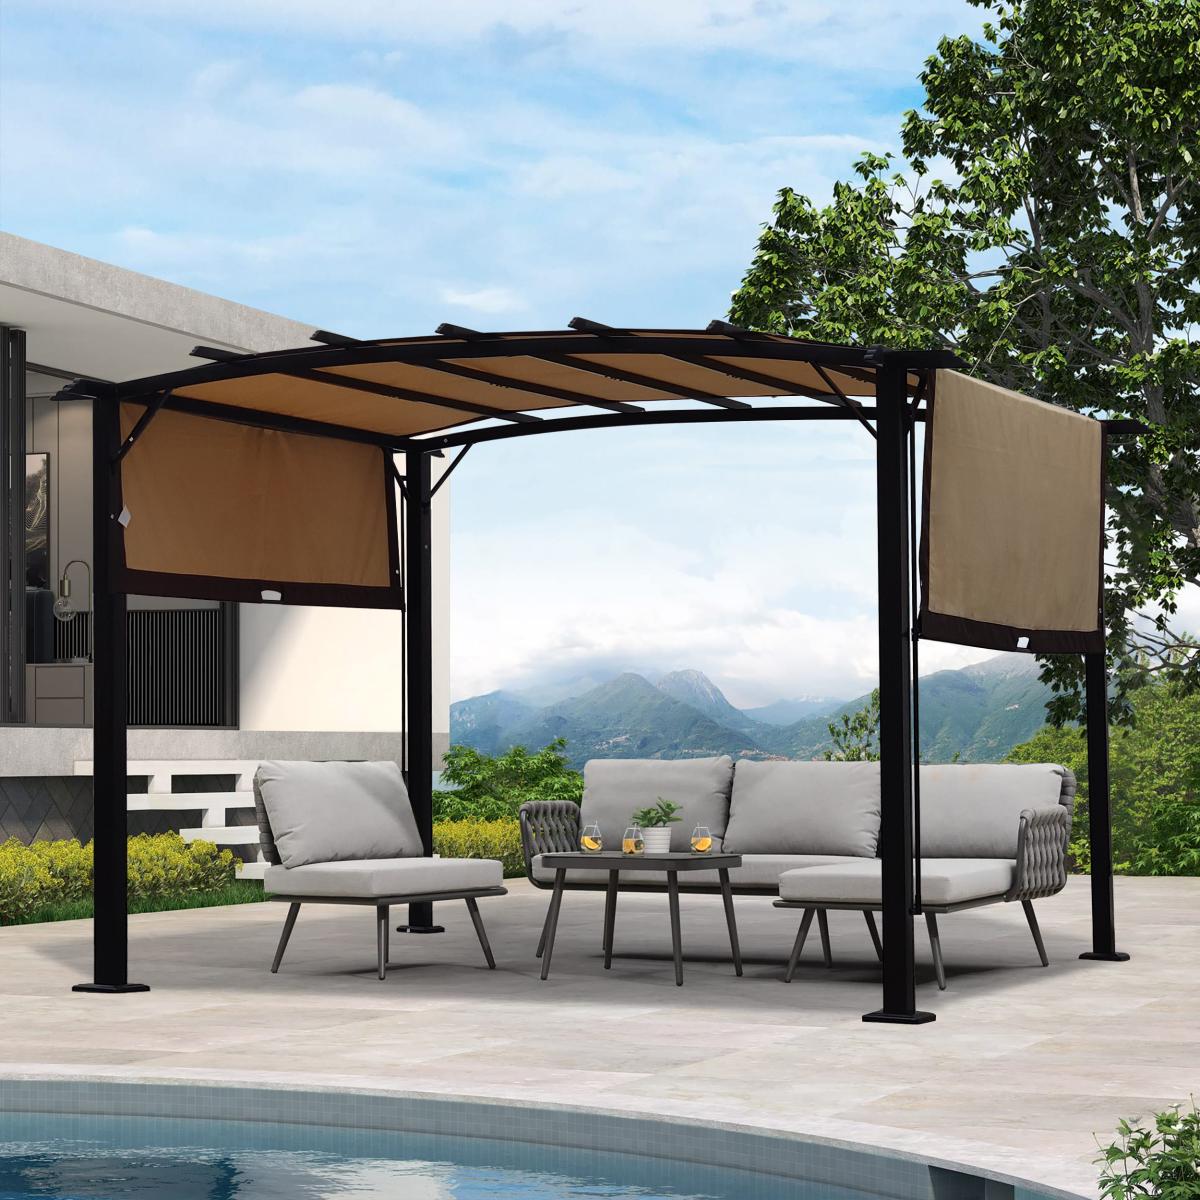 12 x 9 Ft Outdoor Pergola Patio Gazebo,Retractable Shade Canopy,Steel Frame Grape Gazebo,Sunshelter Pergola for Gardens,Terraces,Backyard same as W419s00041